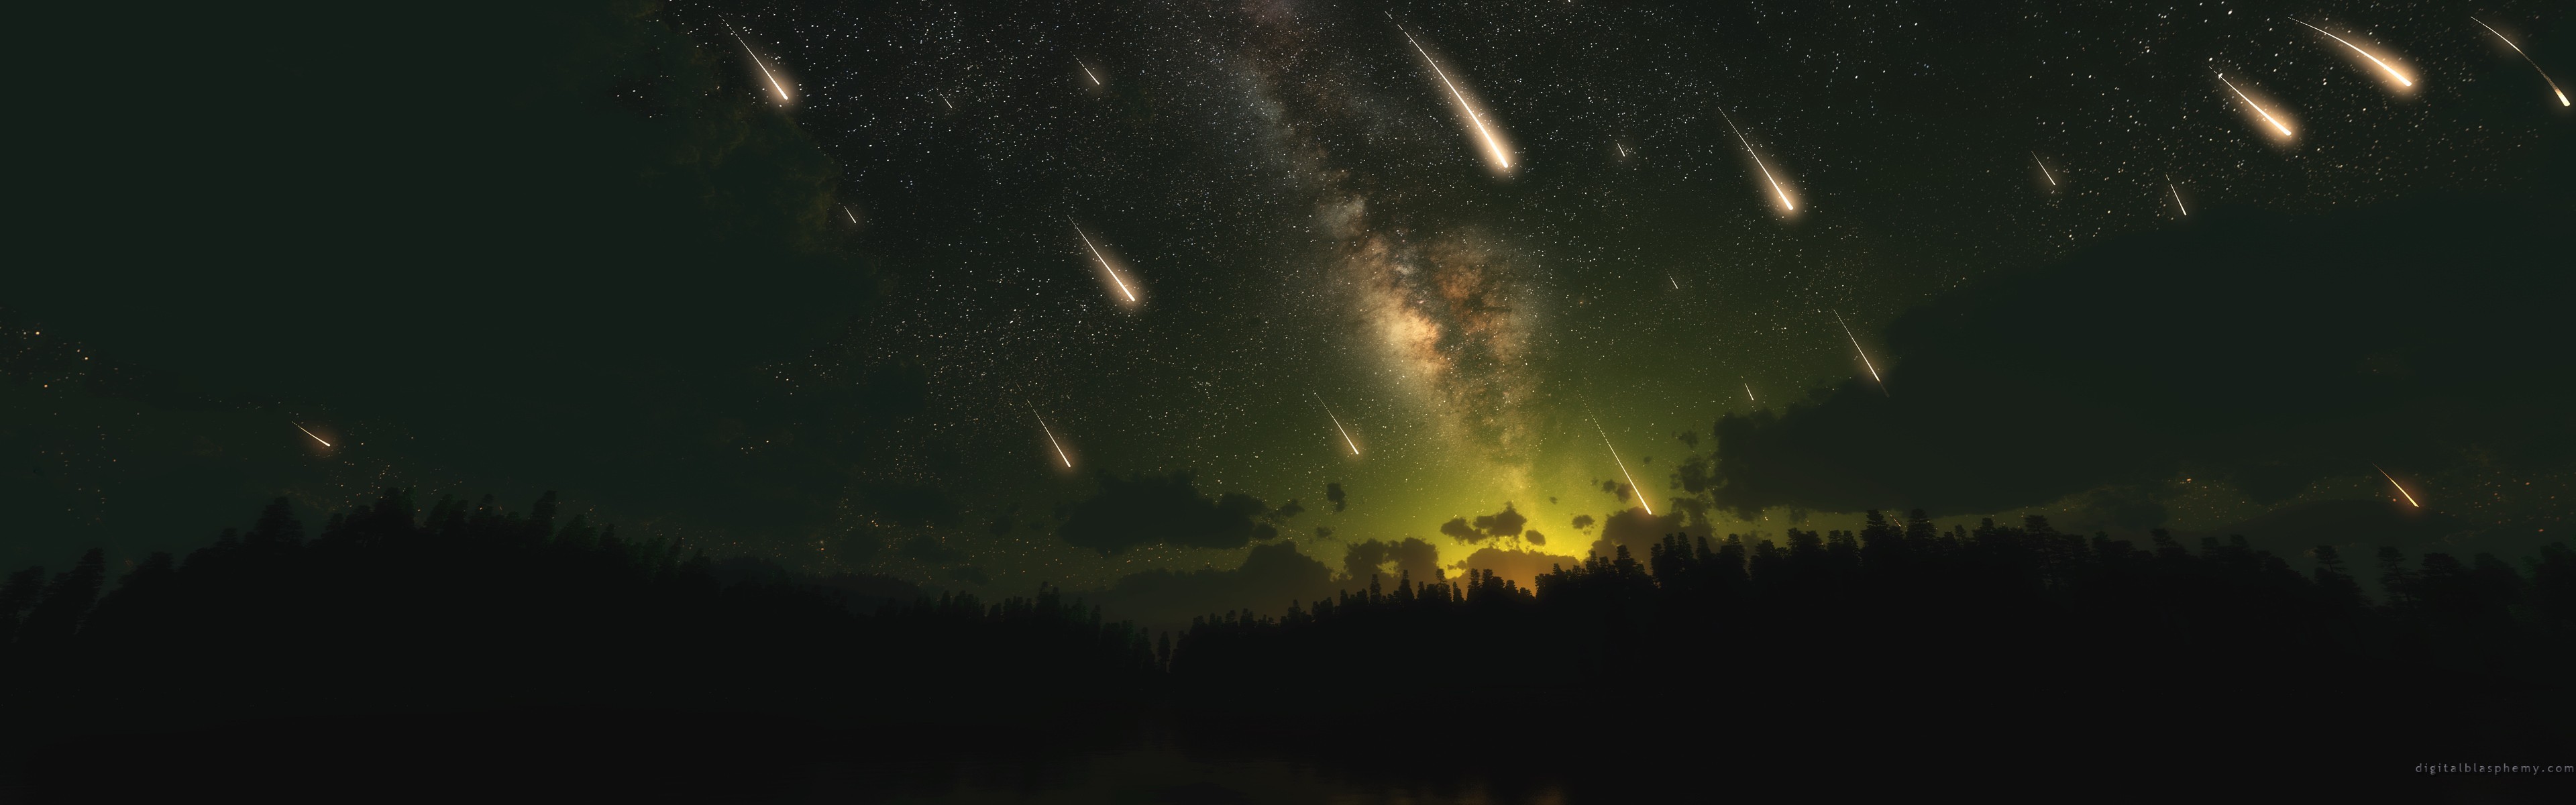 Meteors Dark Night HD Digital Universe 4k Wallpaper Image